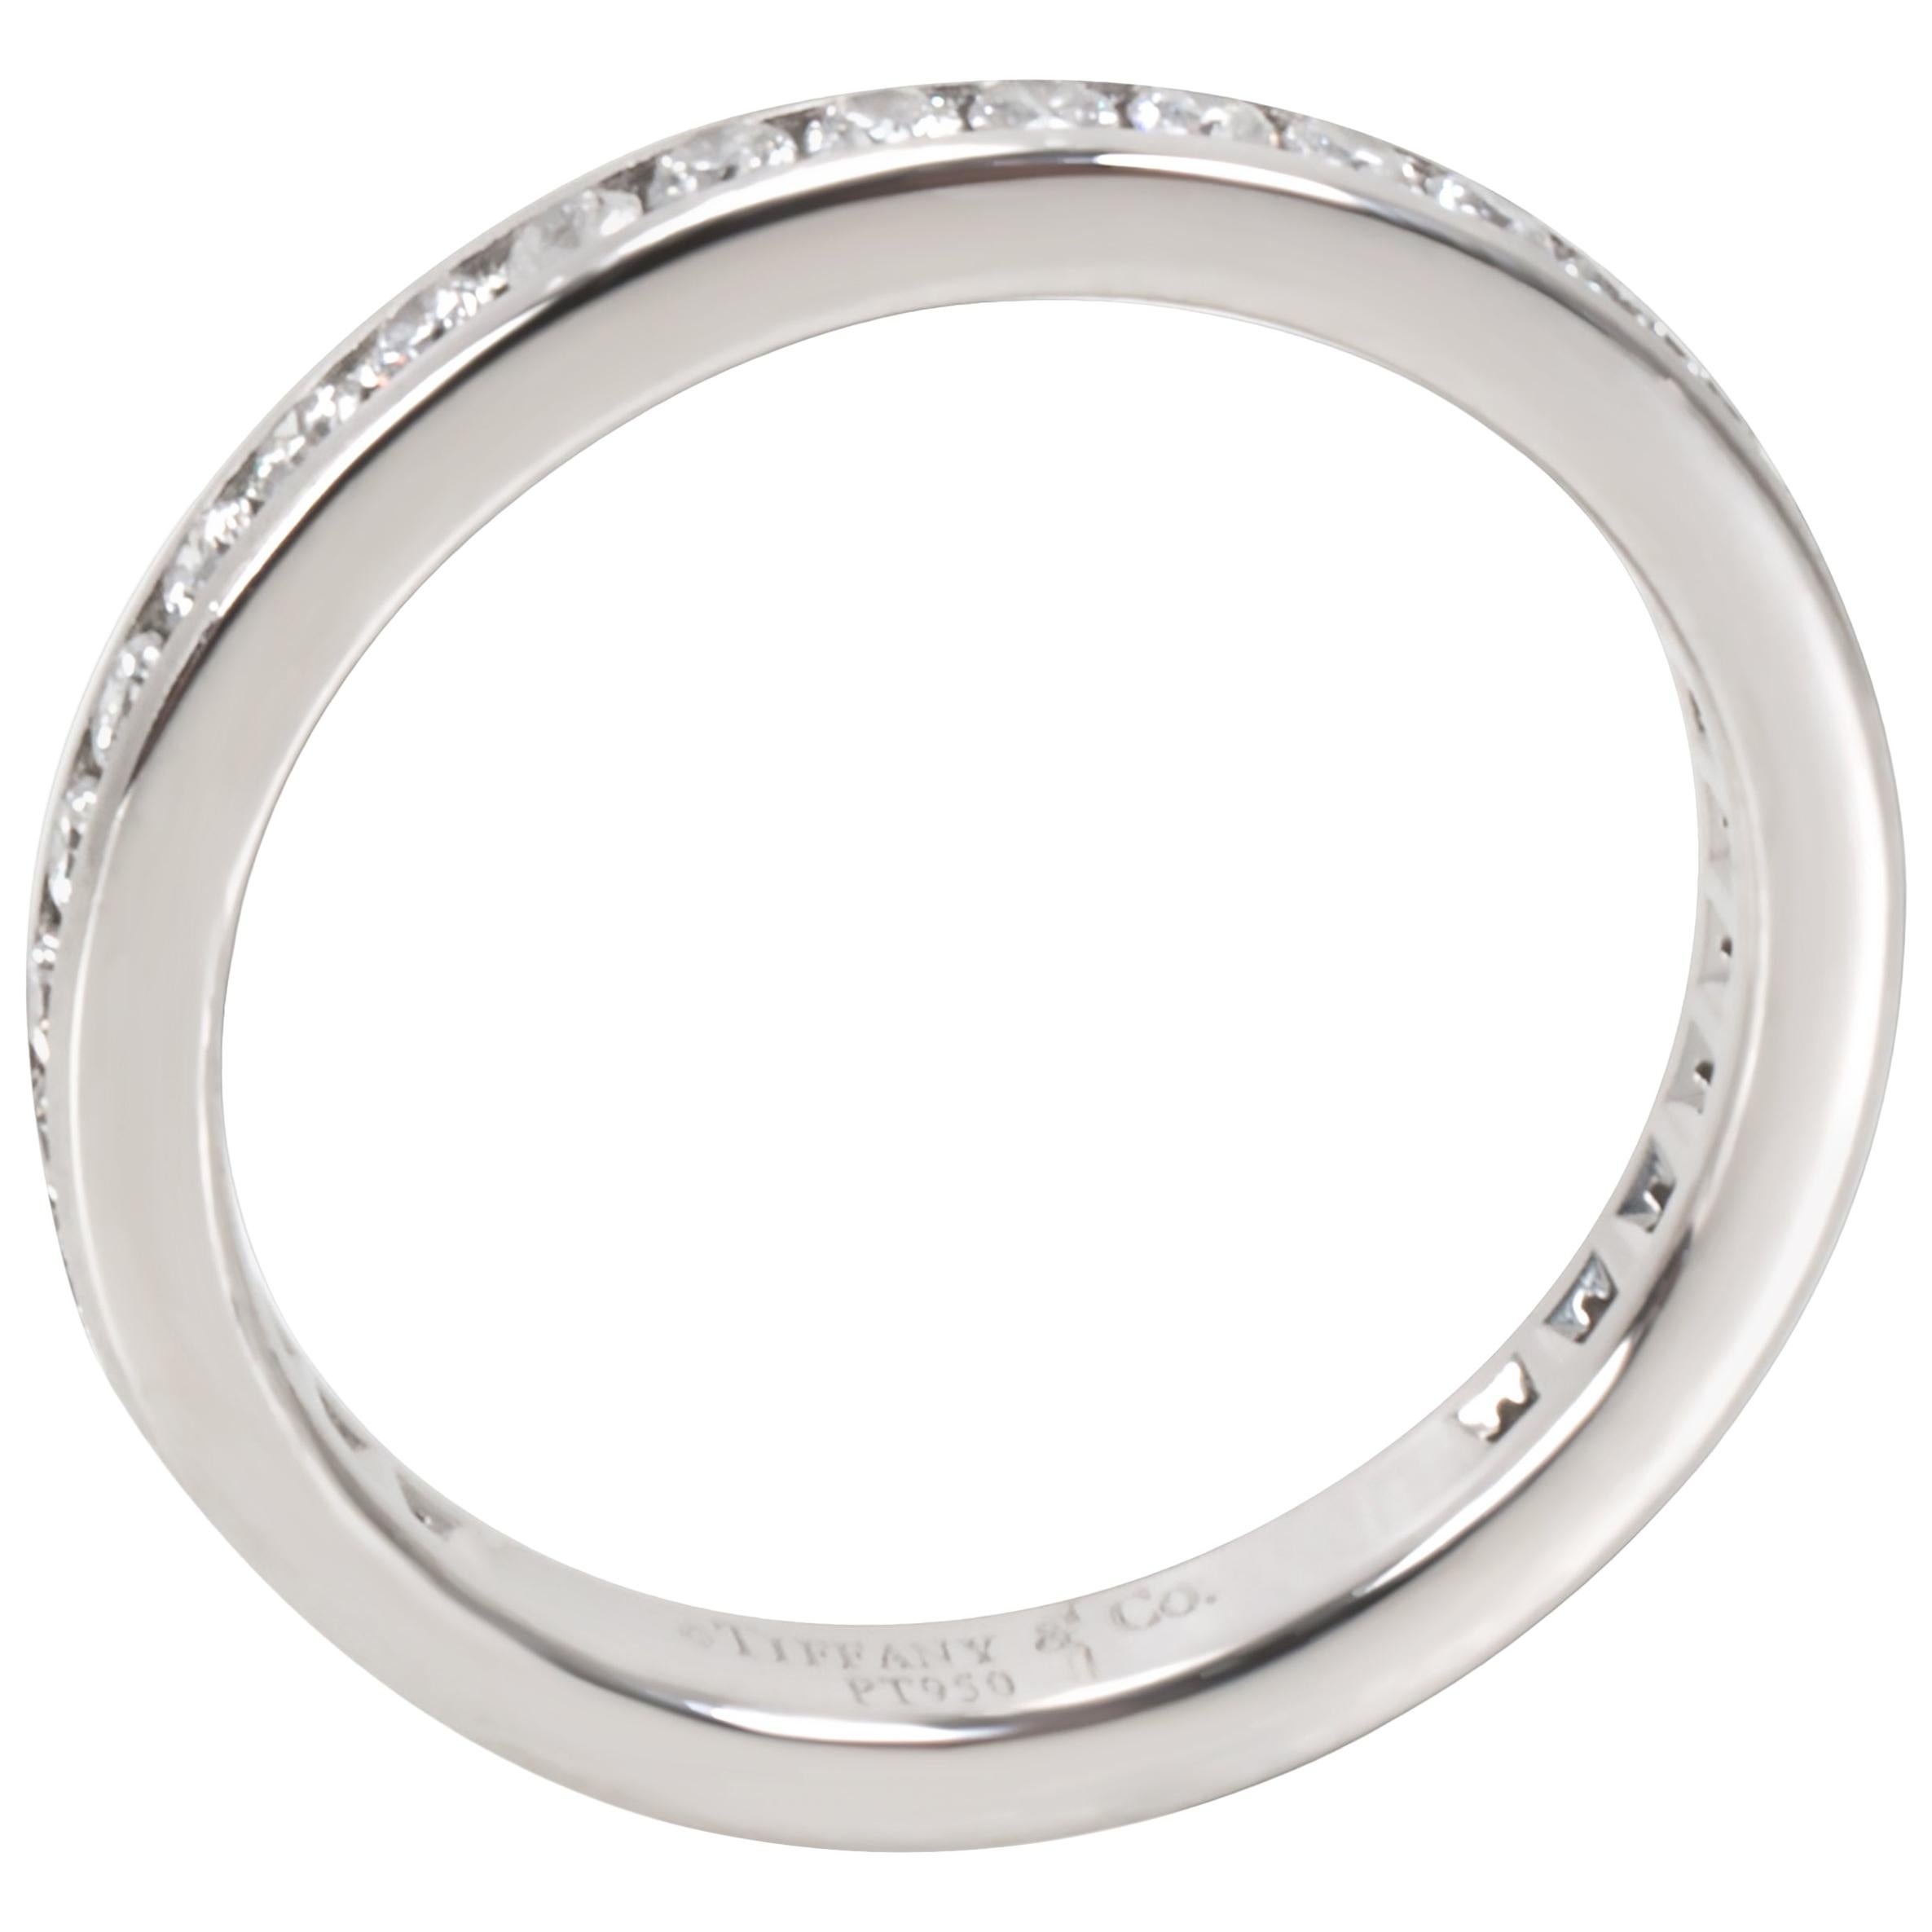 Tiffany & Co. Channel Diamond Wedding Band in Platinum 0.40 Carat